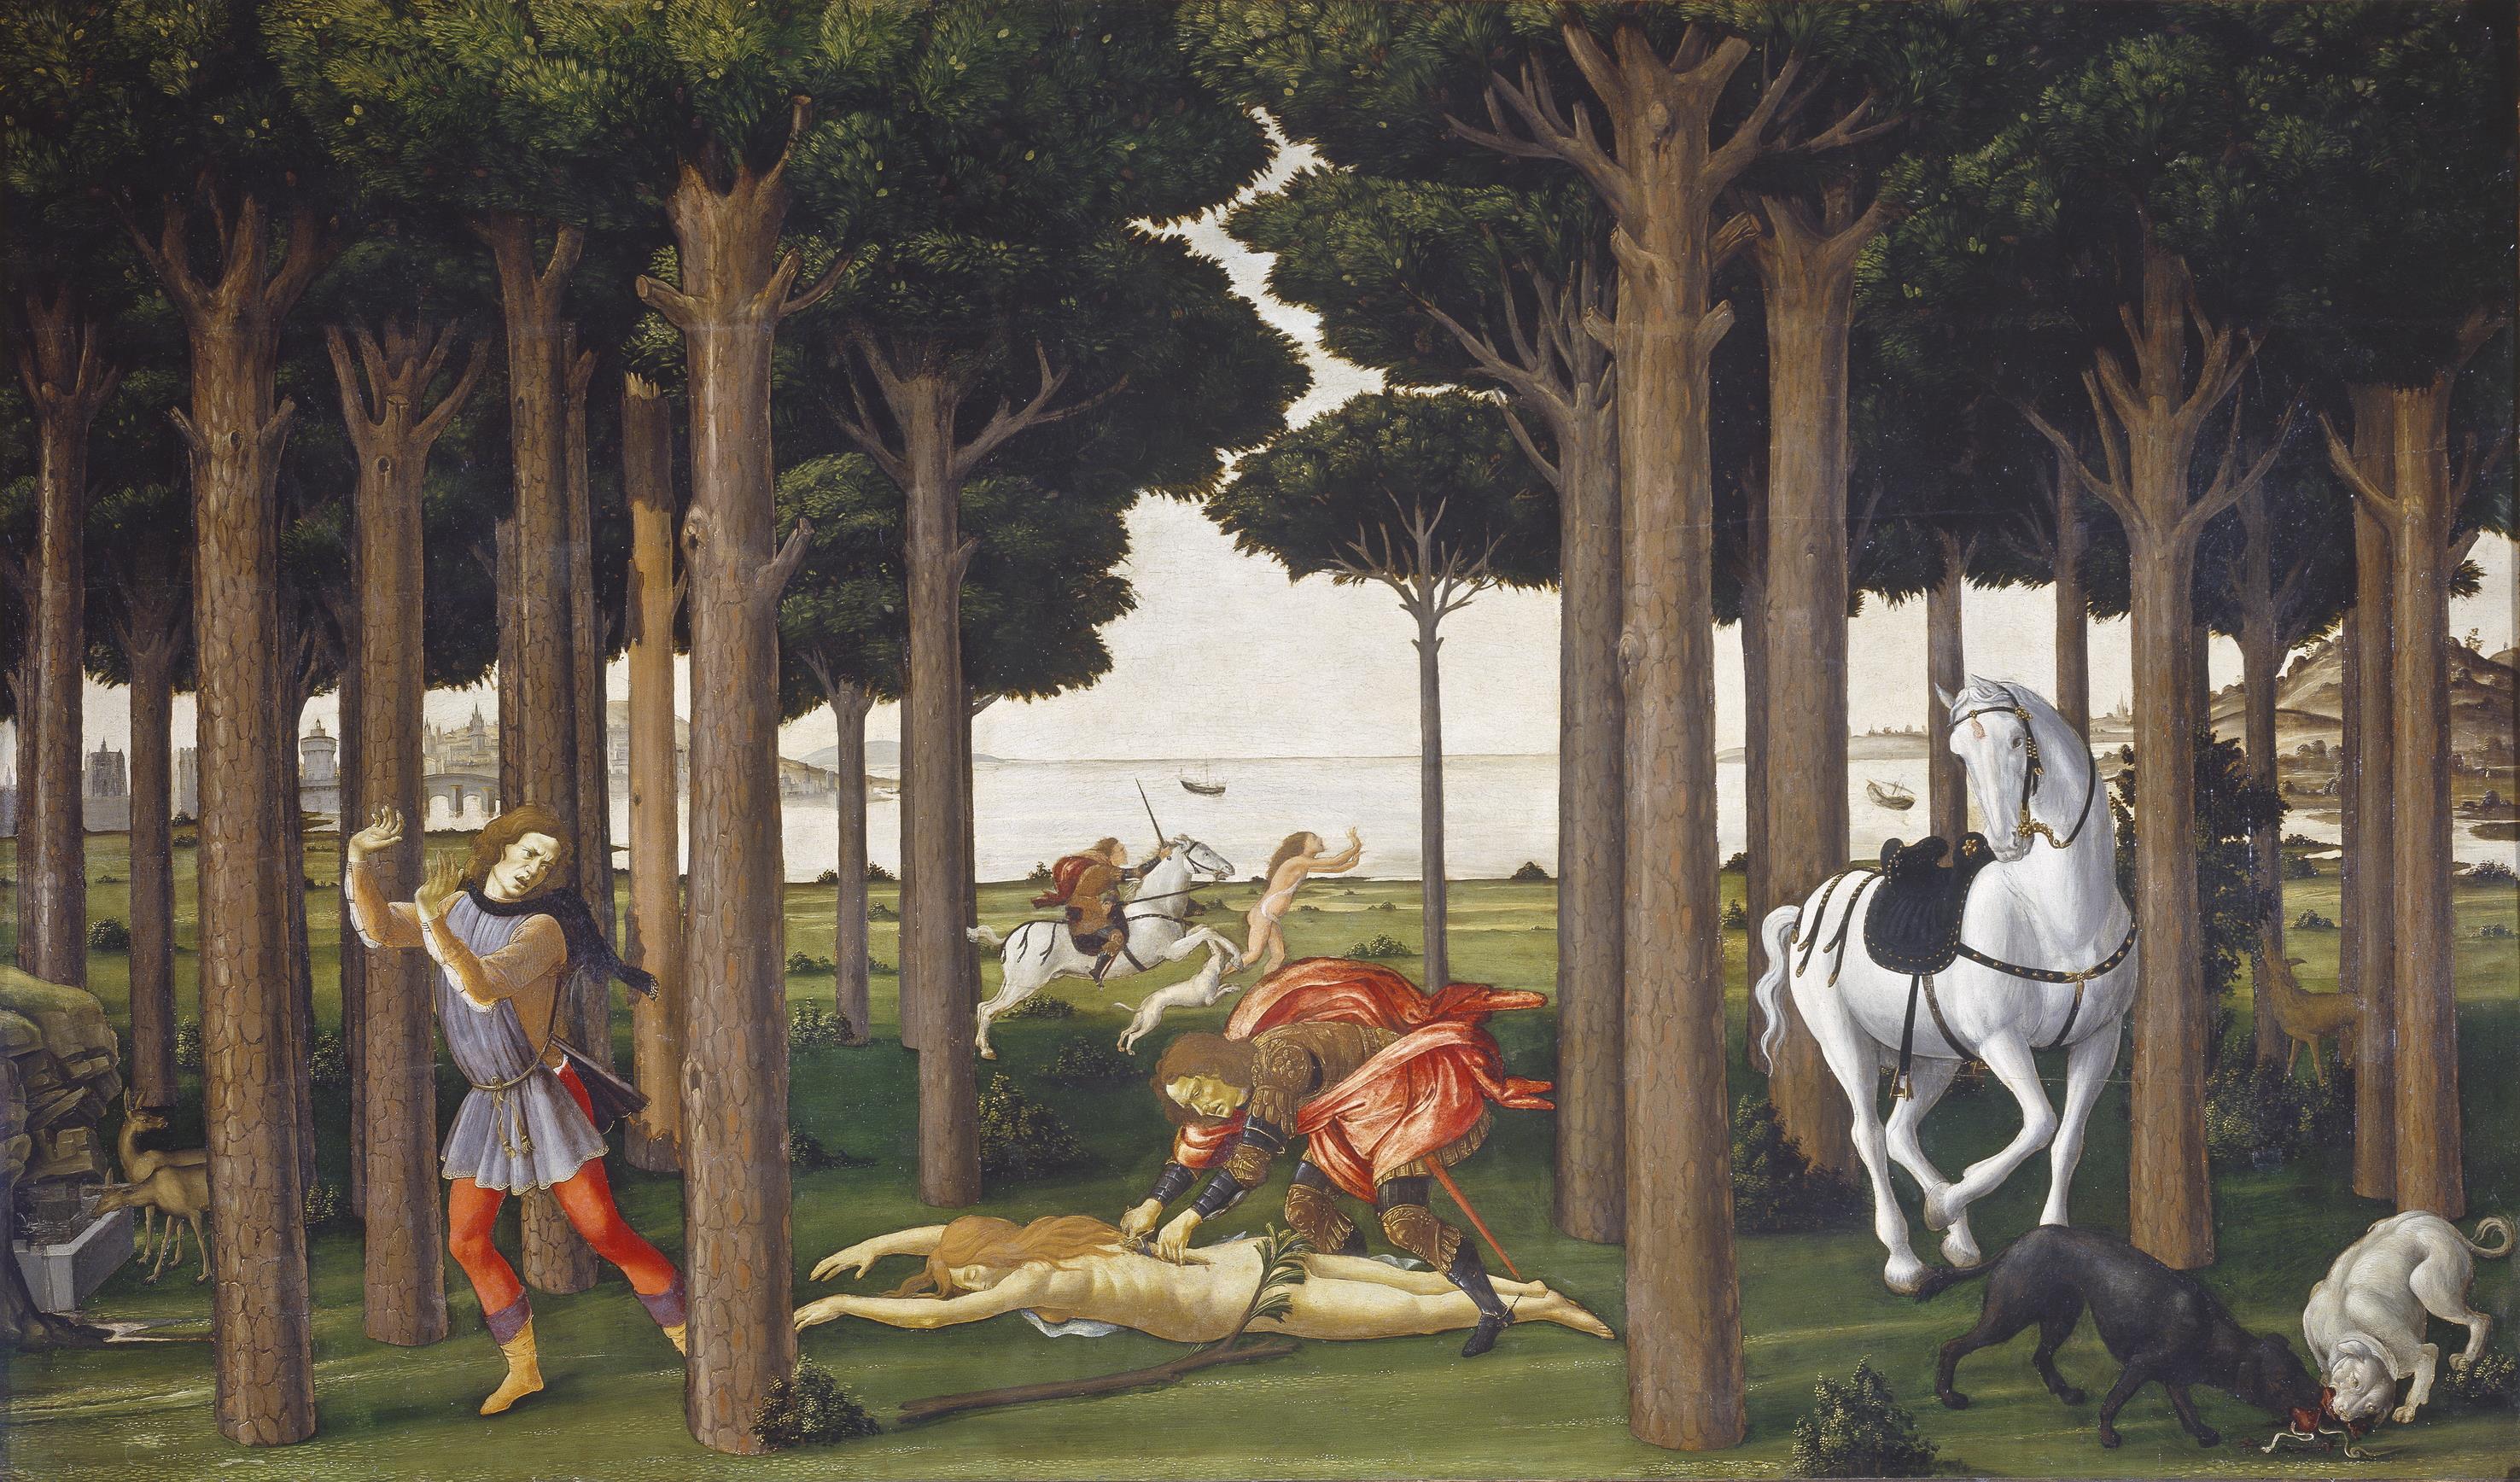 https://upload.wikimedia.org/wikipedia/commons/1/1d/Botticelli_Prado_104.jpg